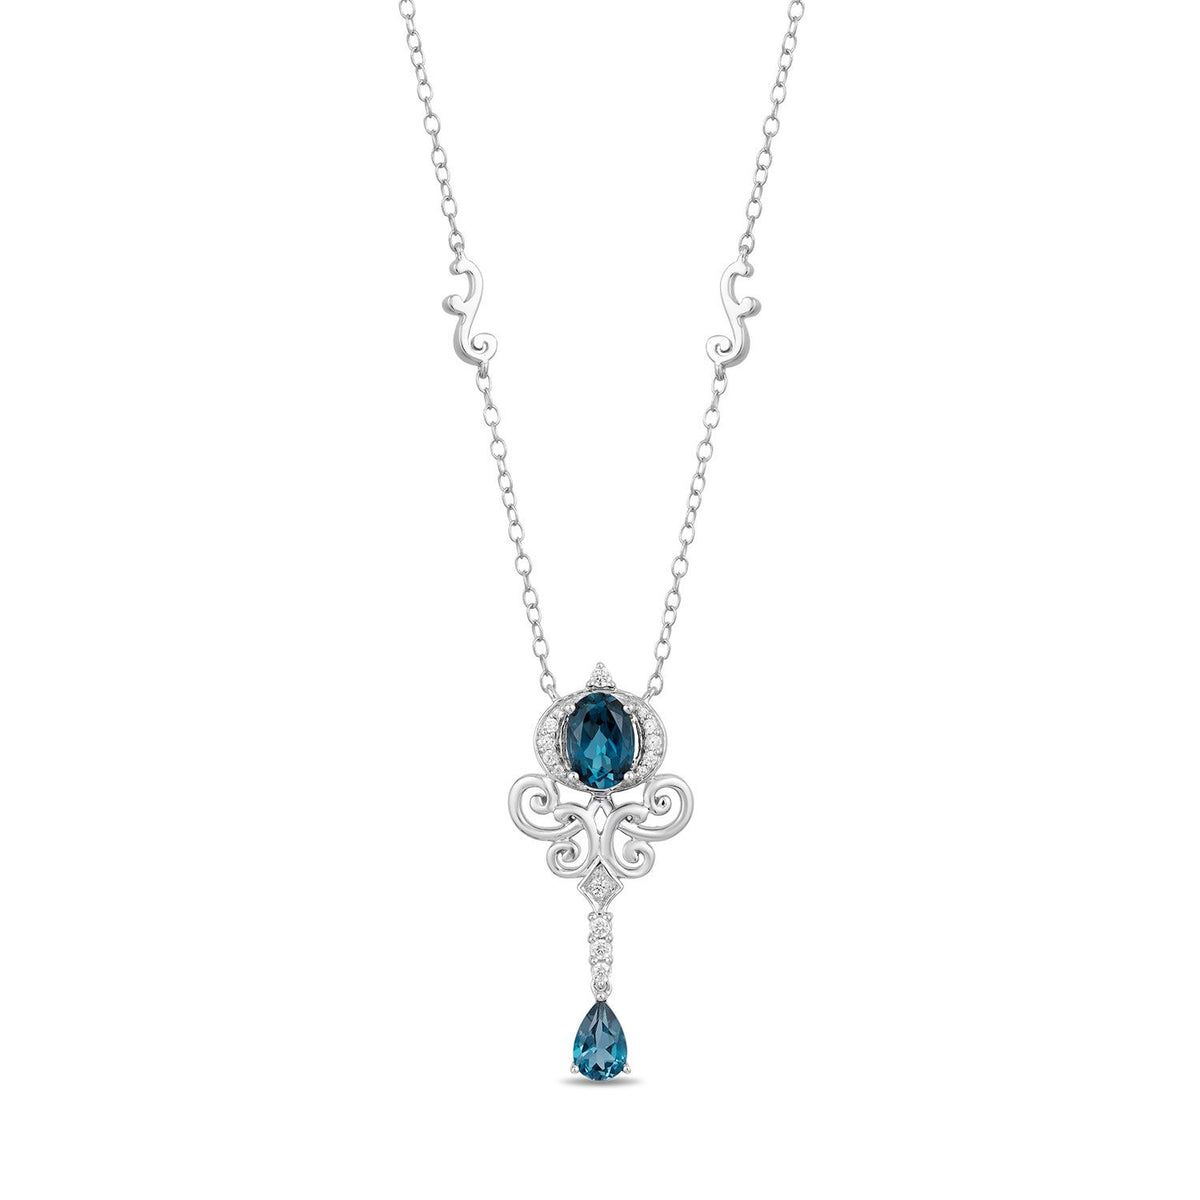 Disney Cinderella Inspired Key Diamond Pendant